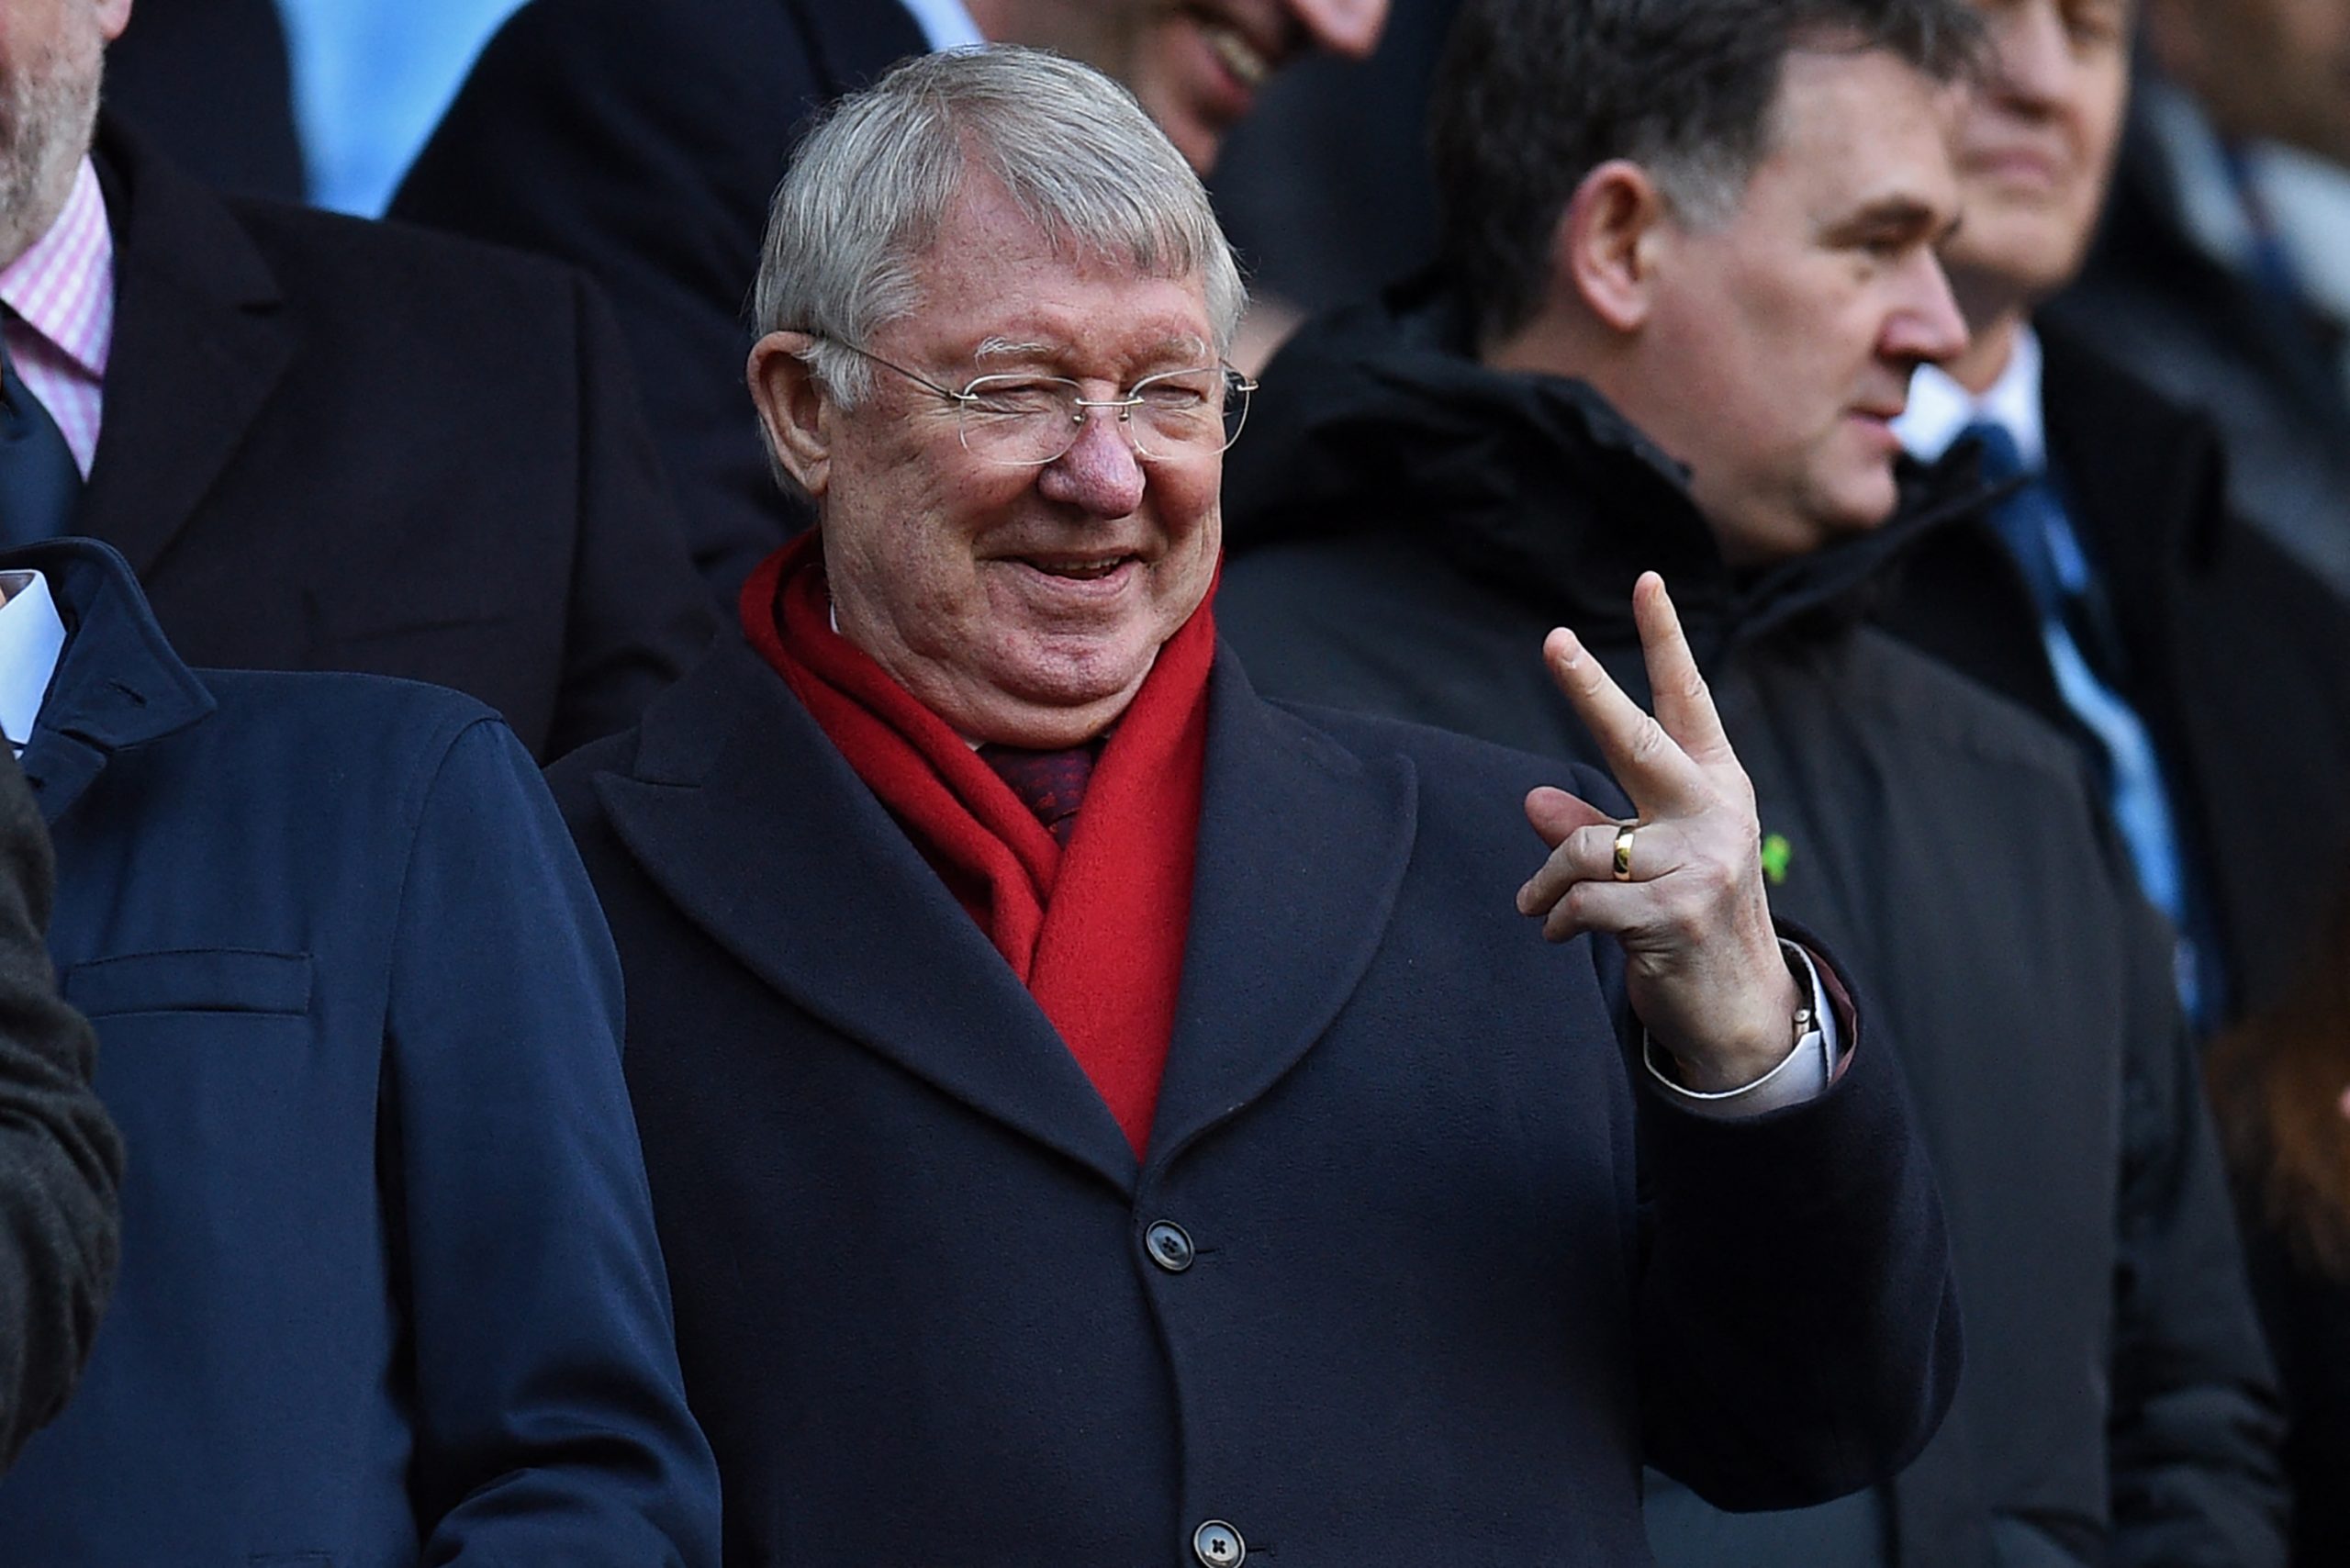 Manchester United legend Alex Ferguson